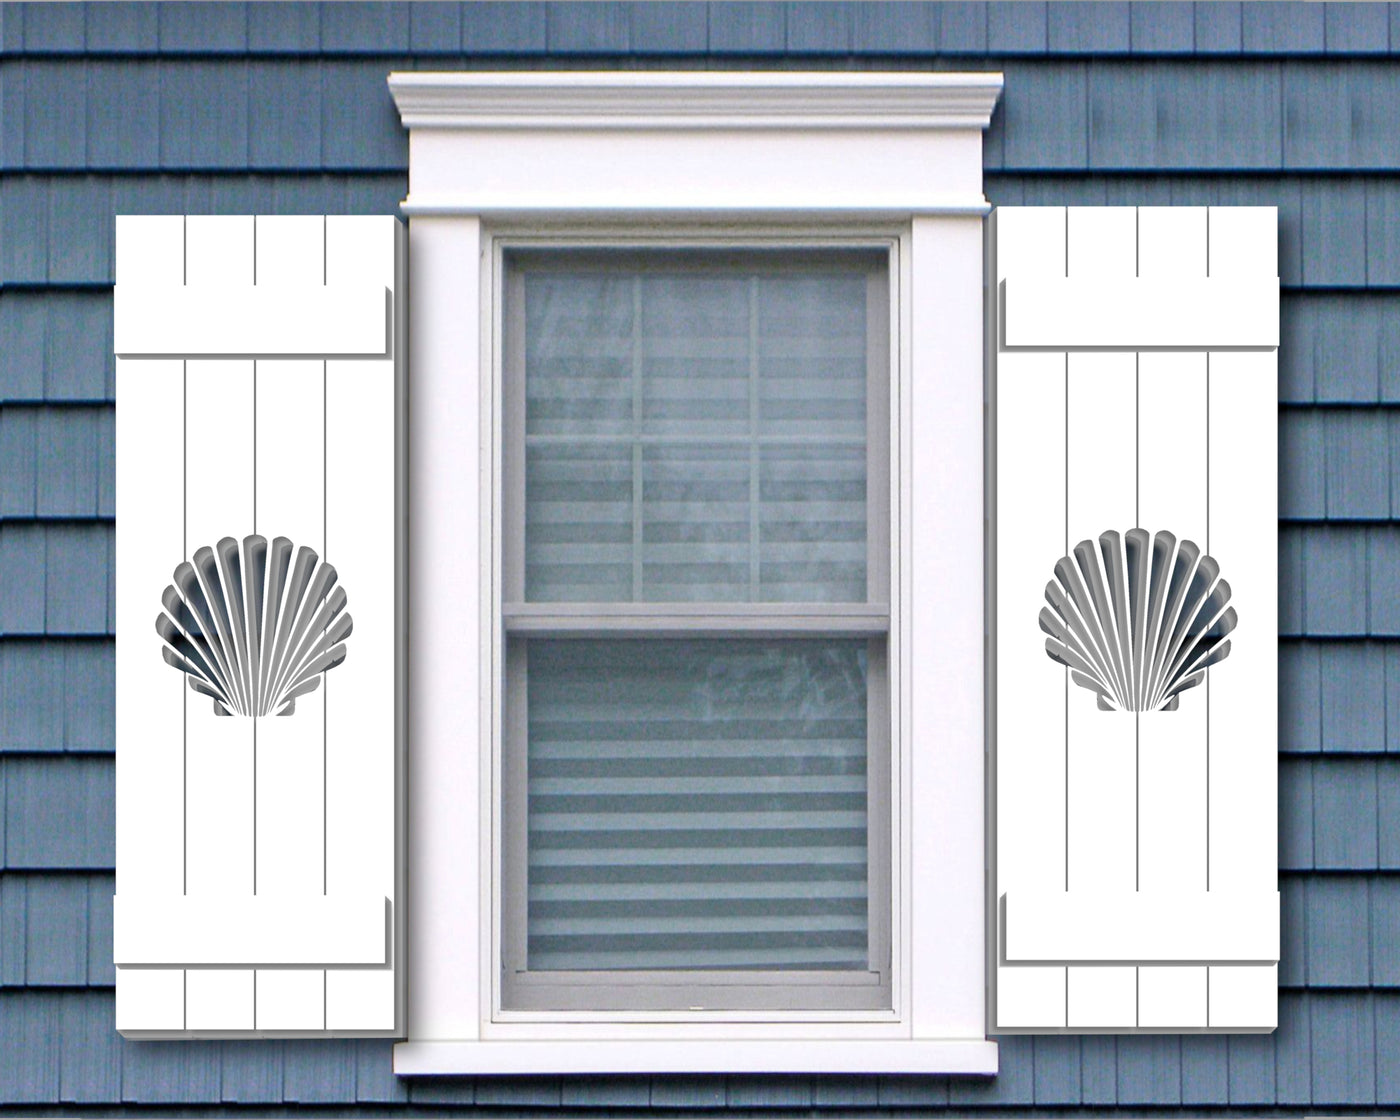 Seashell Design Weather Resistant Plastic Window Shutters (Sold in Pairs) - exteriorplastics - Mailbox Accessories